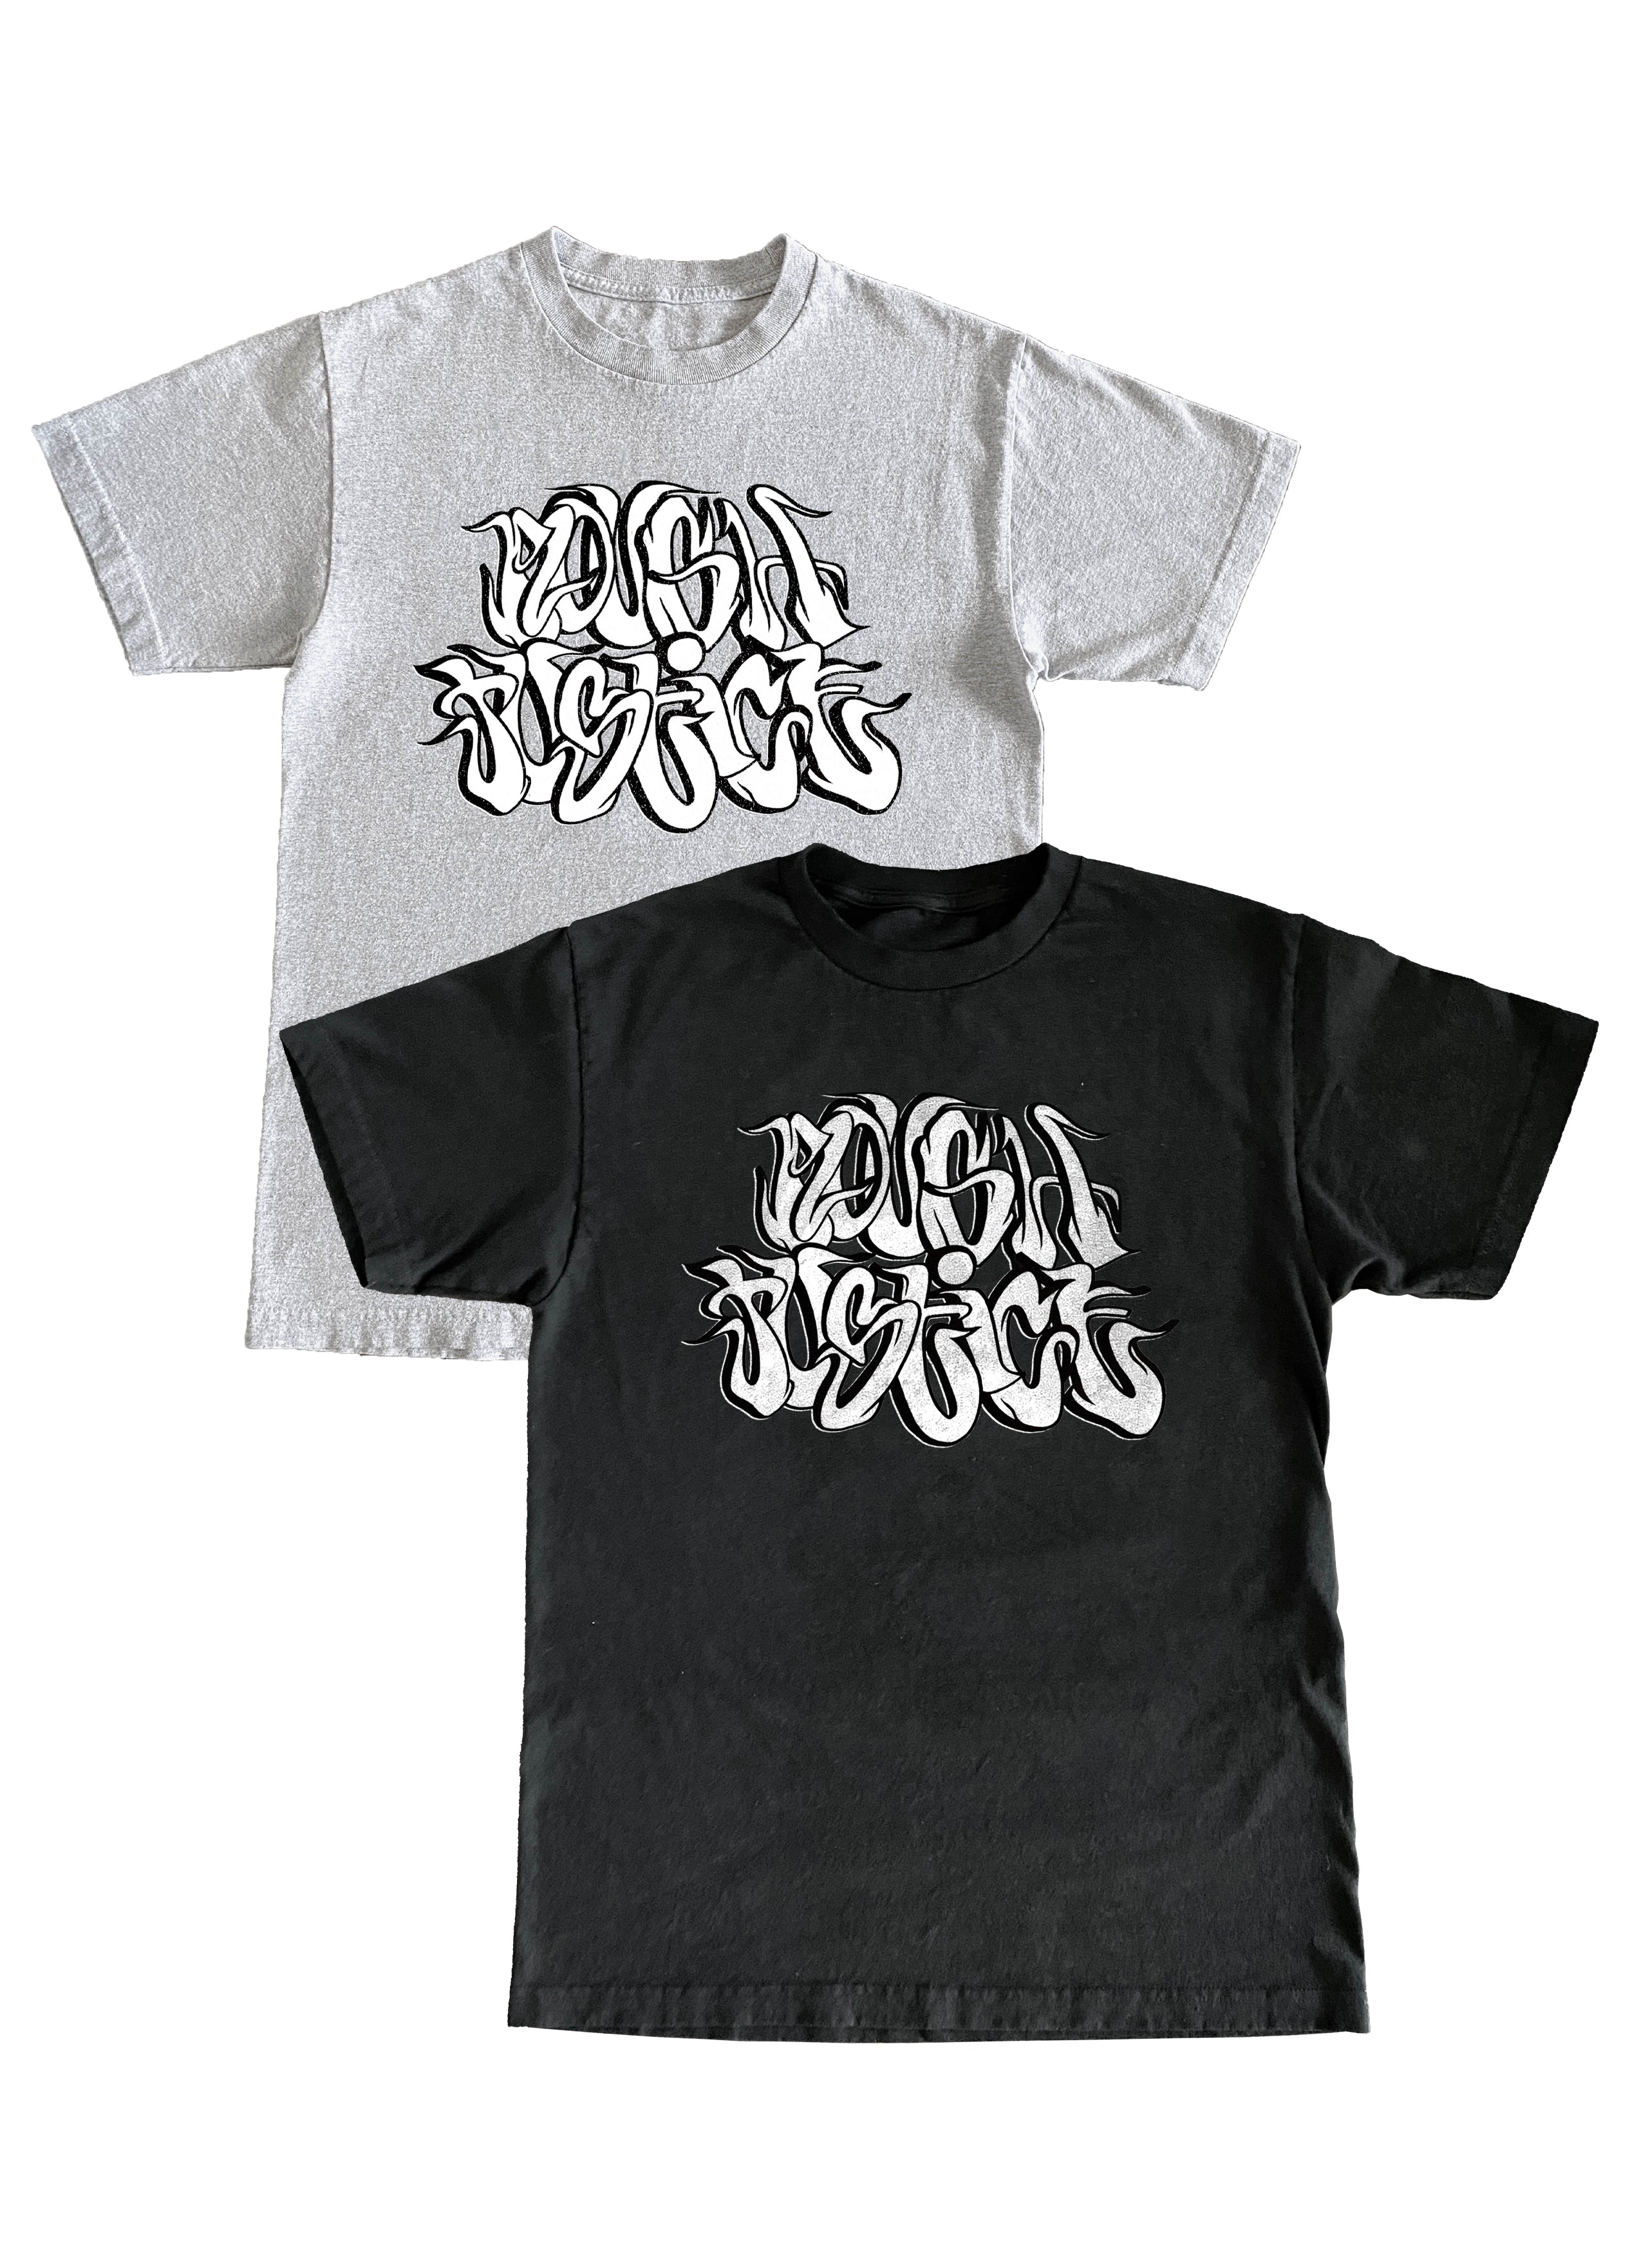 Rough Justice Graffiti T-Shirt